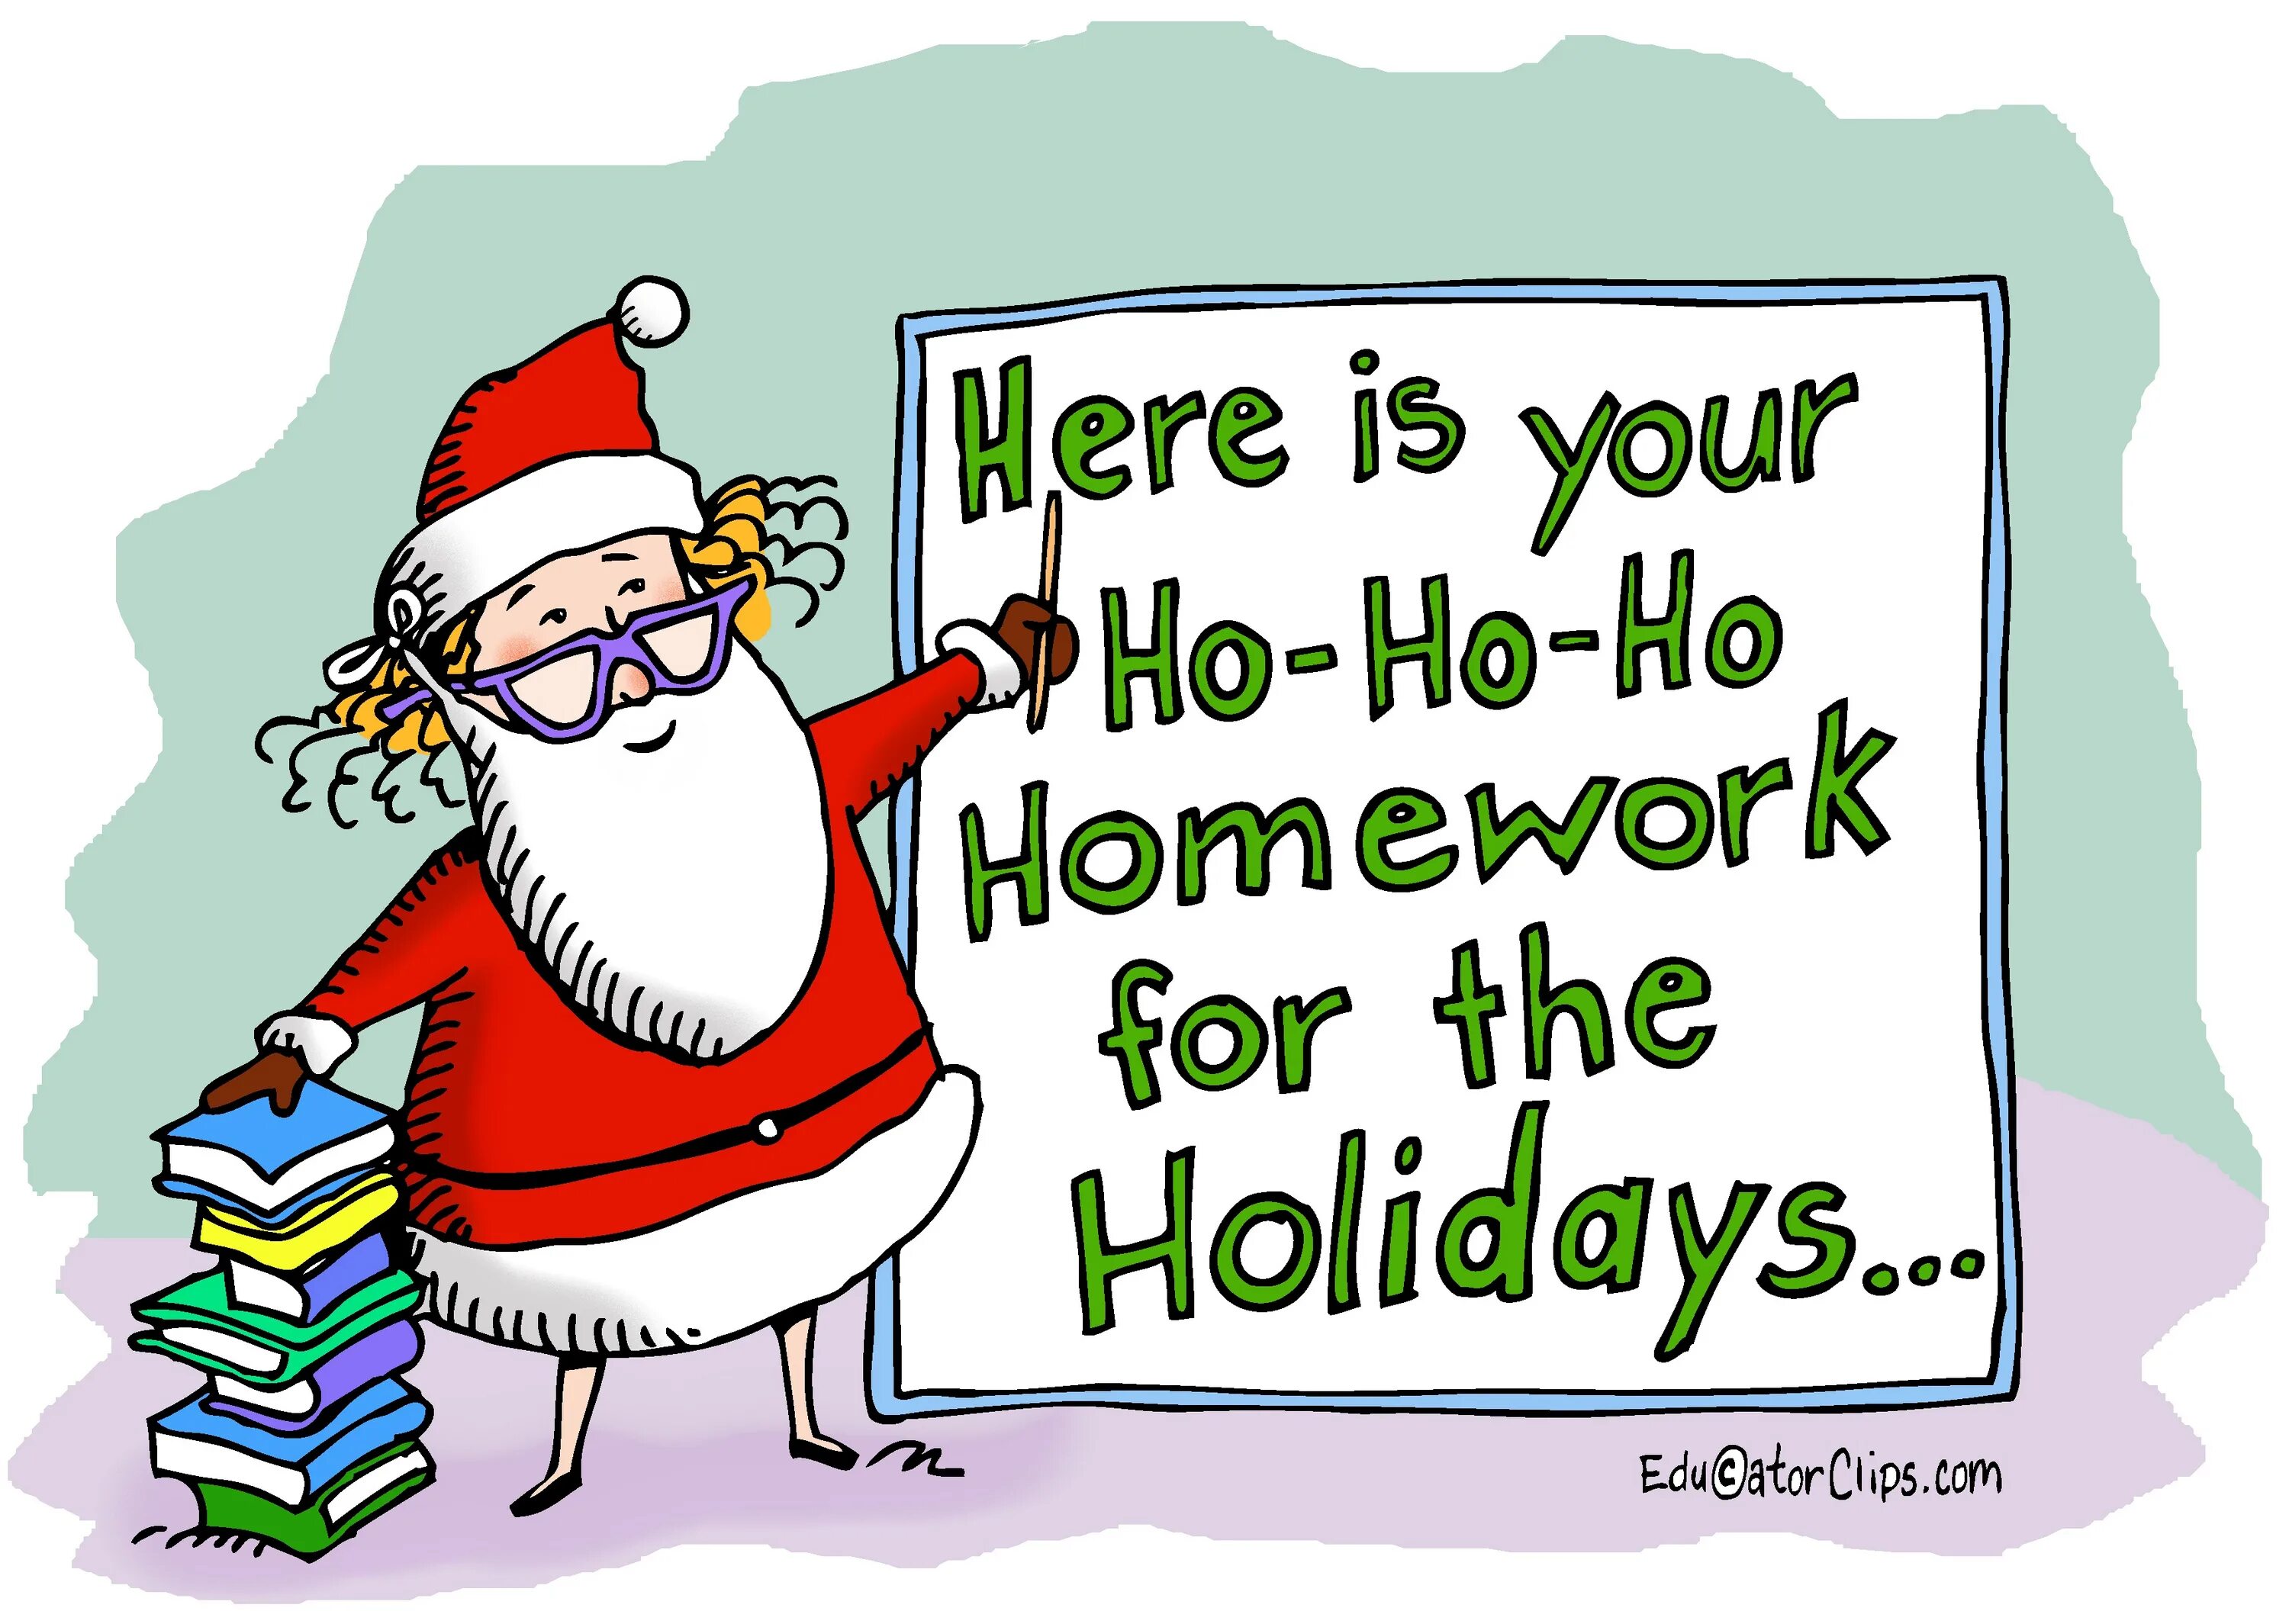 Holiday homework. Homework Christmas. Holiday Home work. Homework что это за праздник.